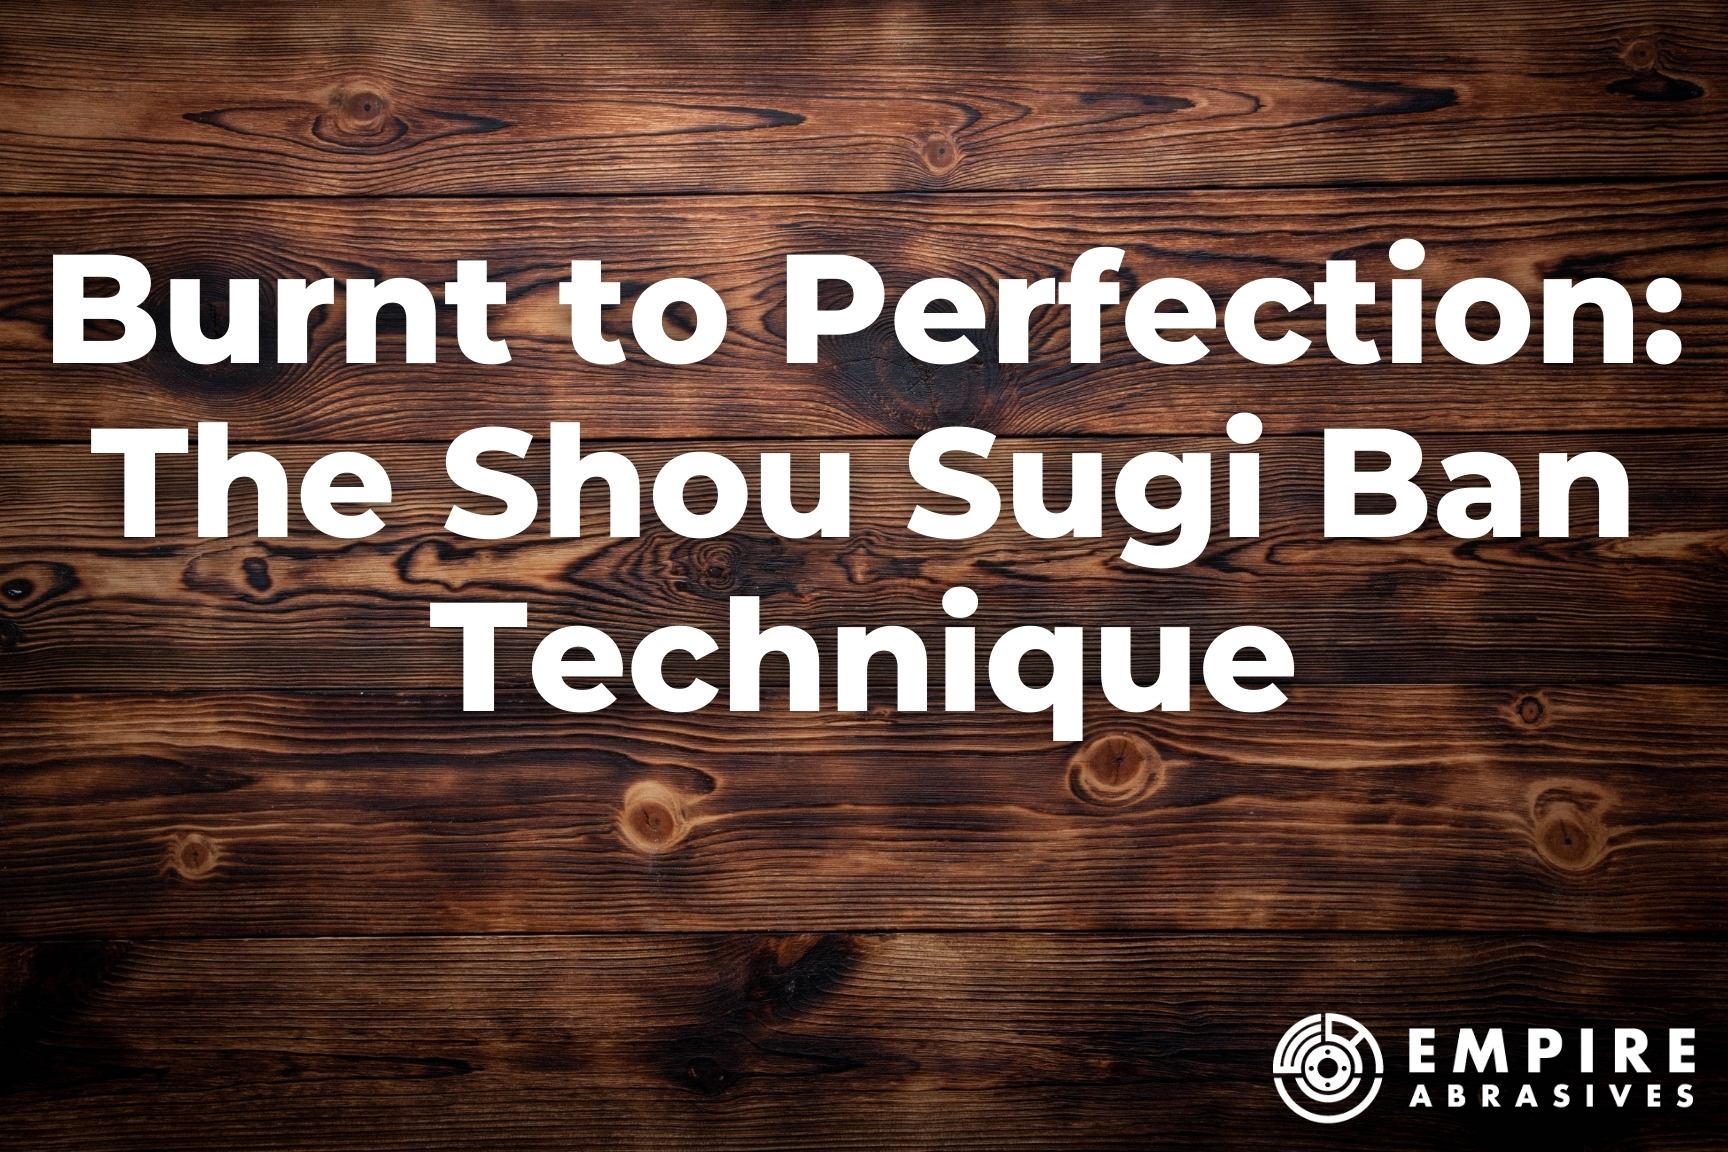 Burnt to Perfection: The Shou Sugi Ban Technique